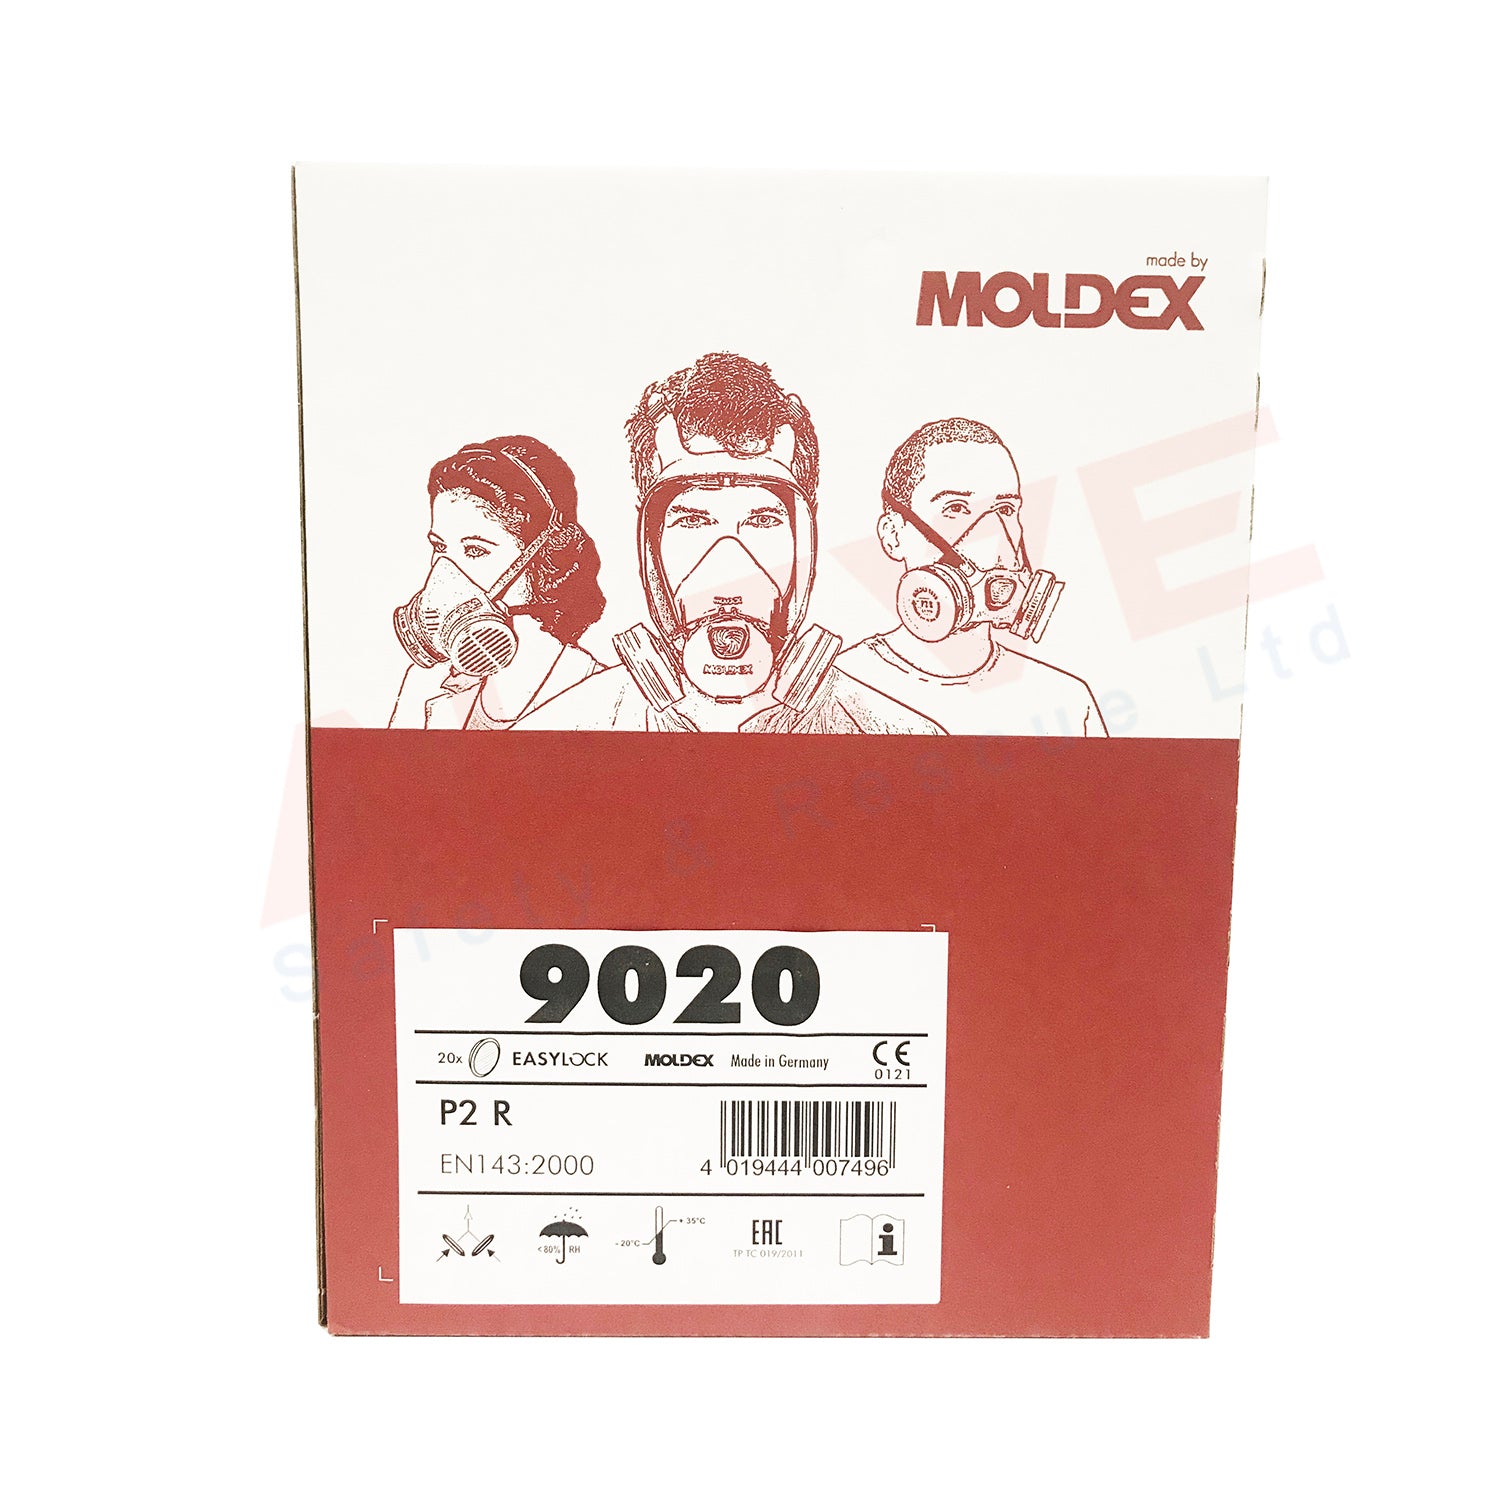 Moldex 9020 - P2 R Particulate Easylock Filter